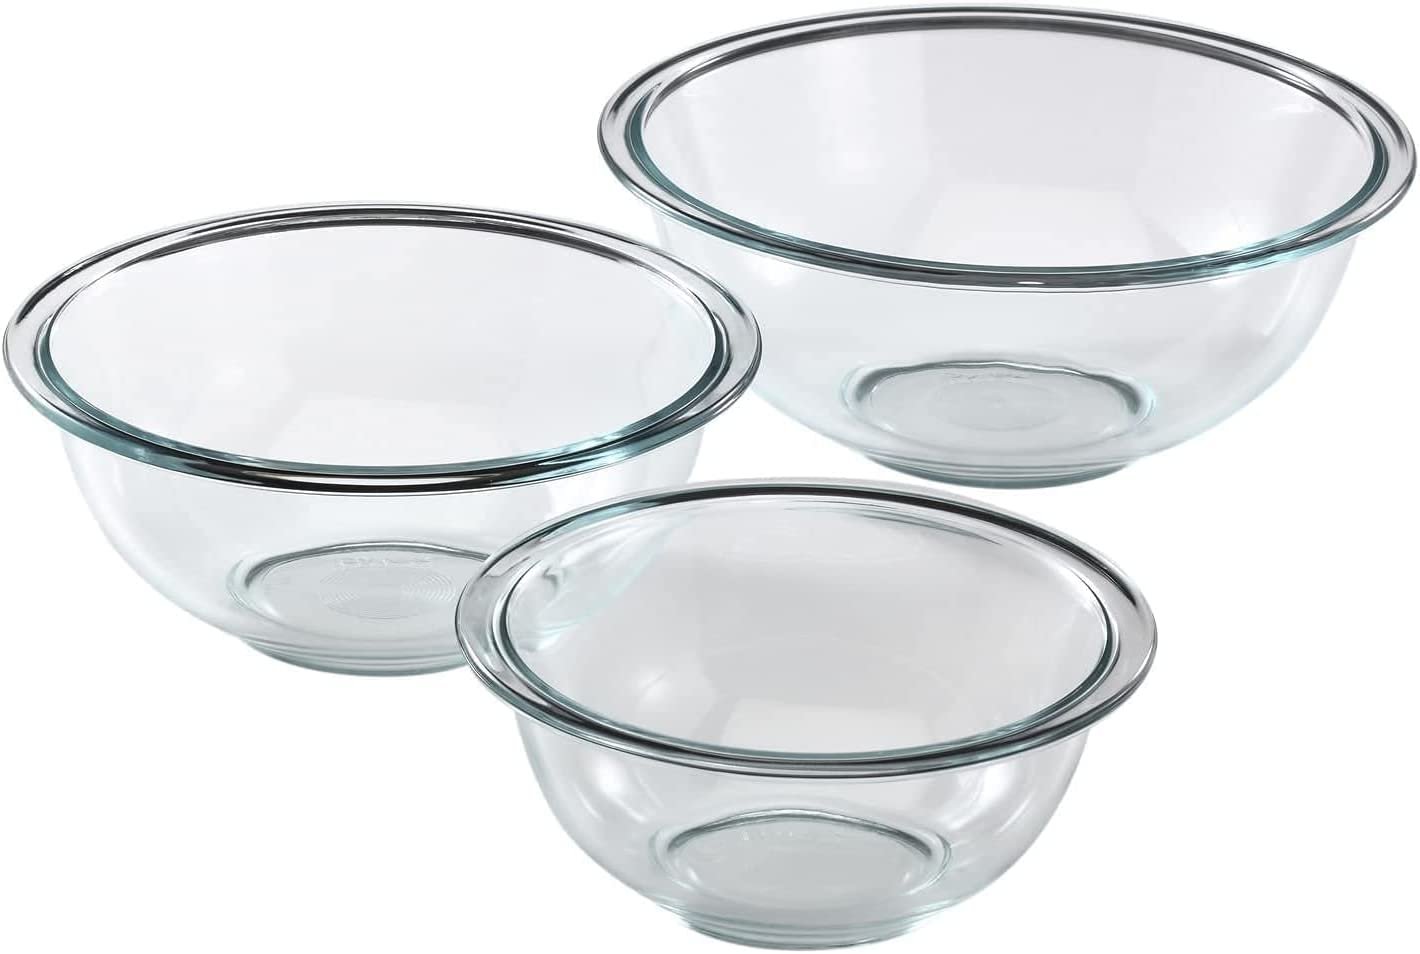 Glass bowls.jpg